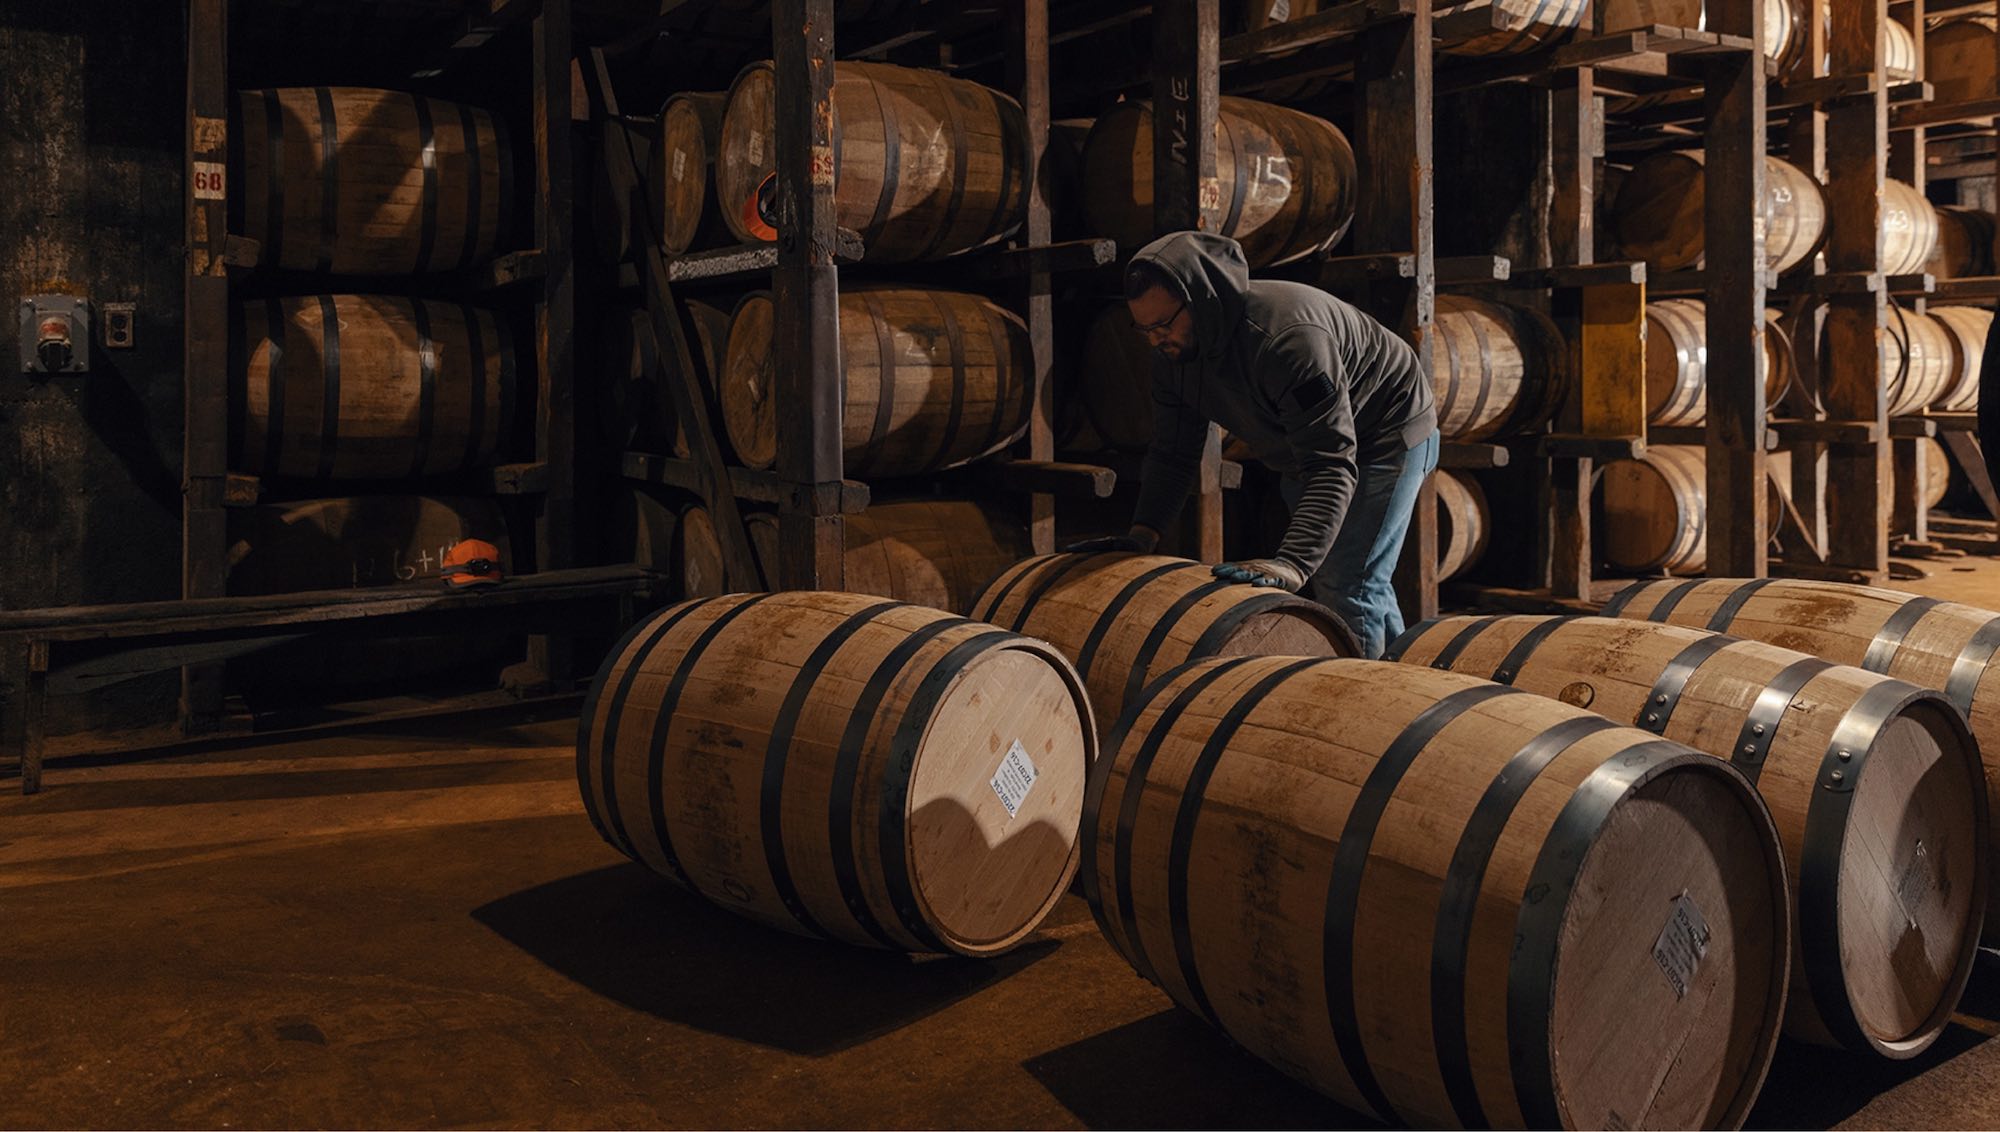 A man pushes barrels of bourbon through the distillery